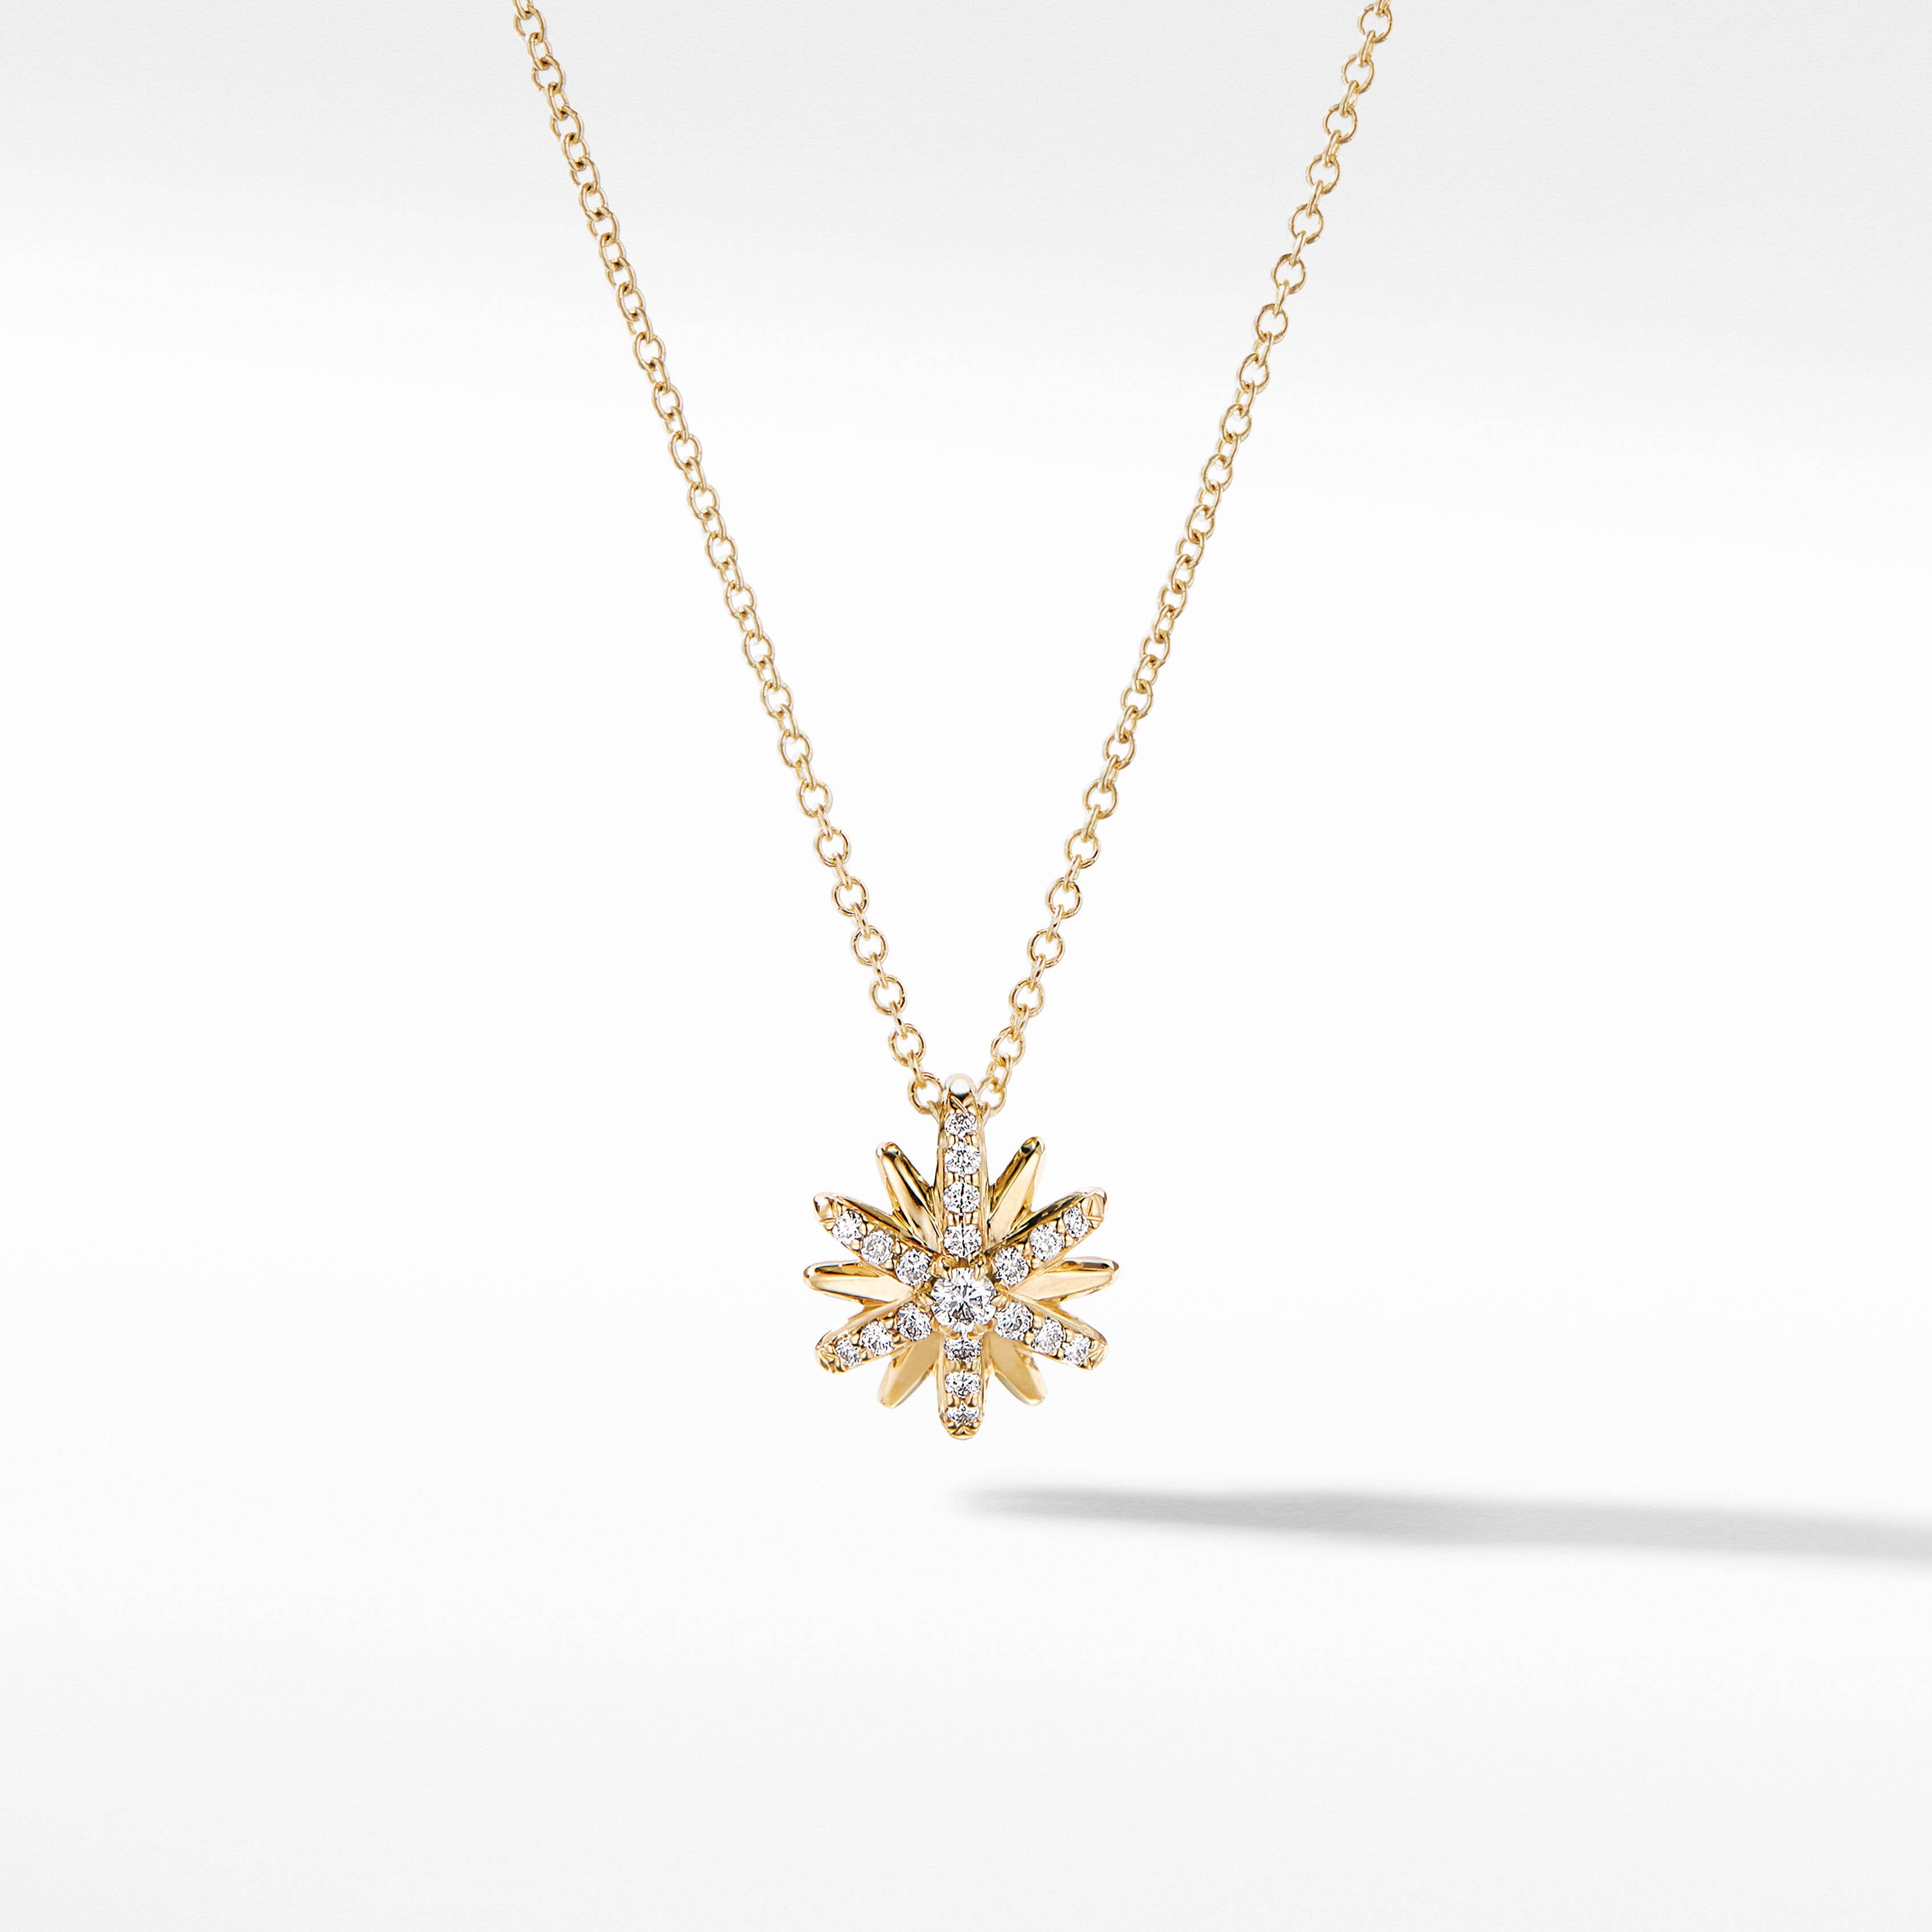 Petite Starburst Pendant Necklace in 18K Yellow Gold with Pavé Diamonds